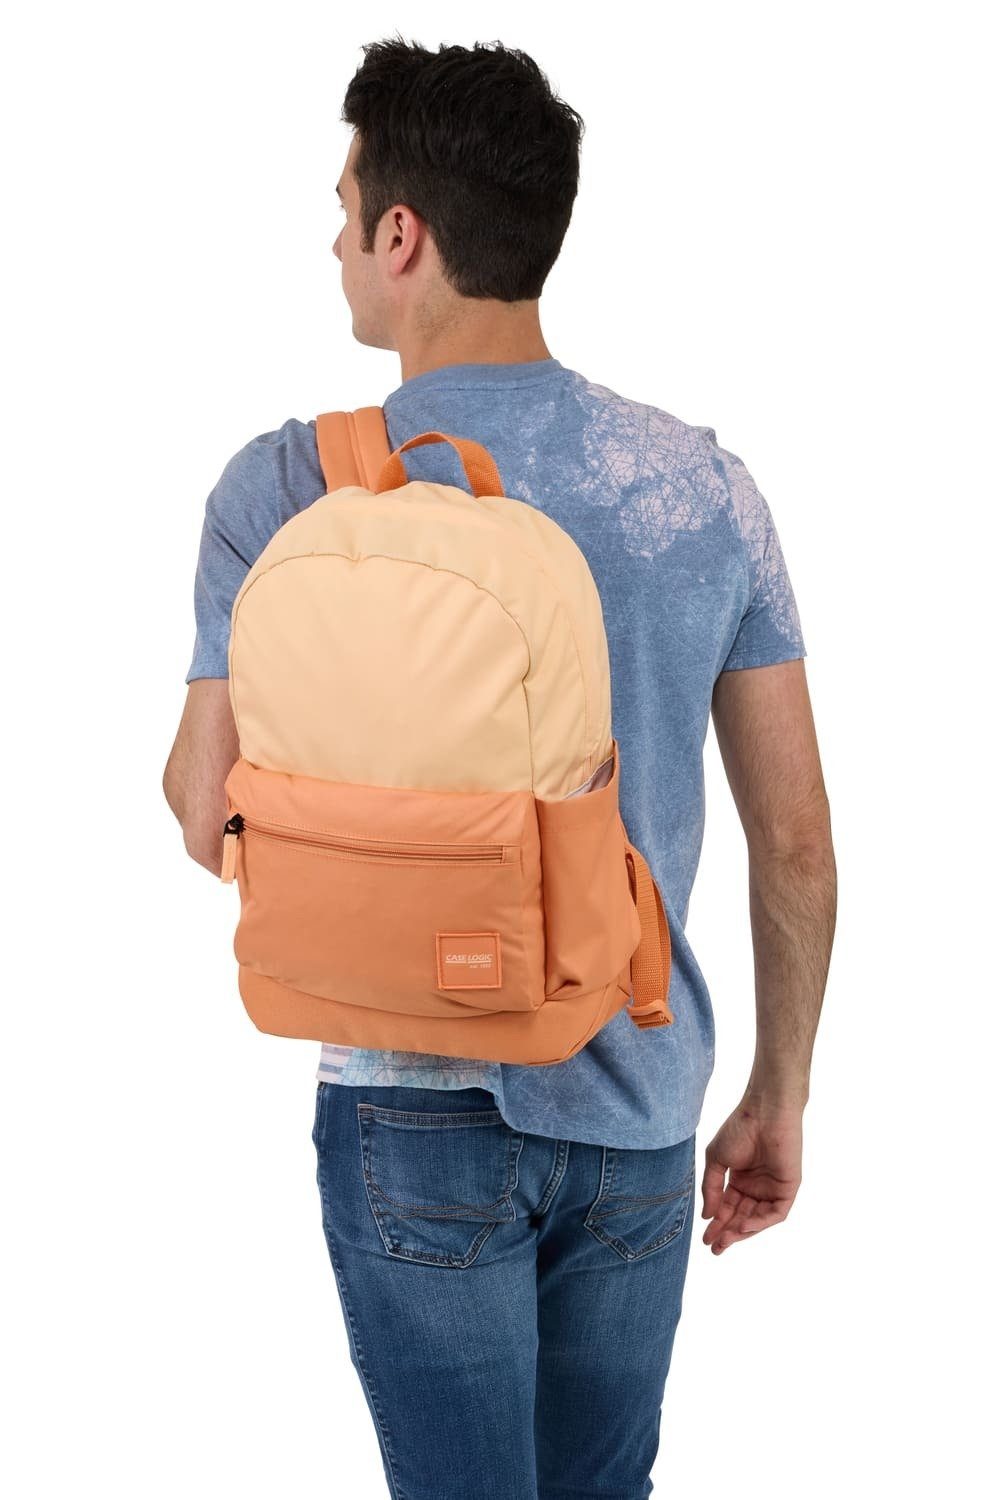 Logic Recycled Commence Logic Apricot Notebookrucksack Backpack Case Case